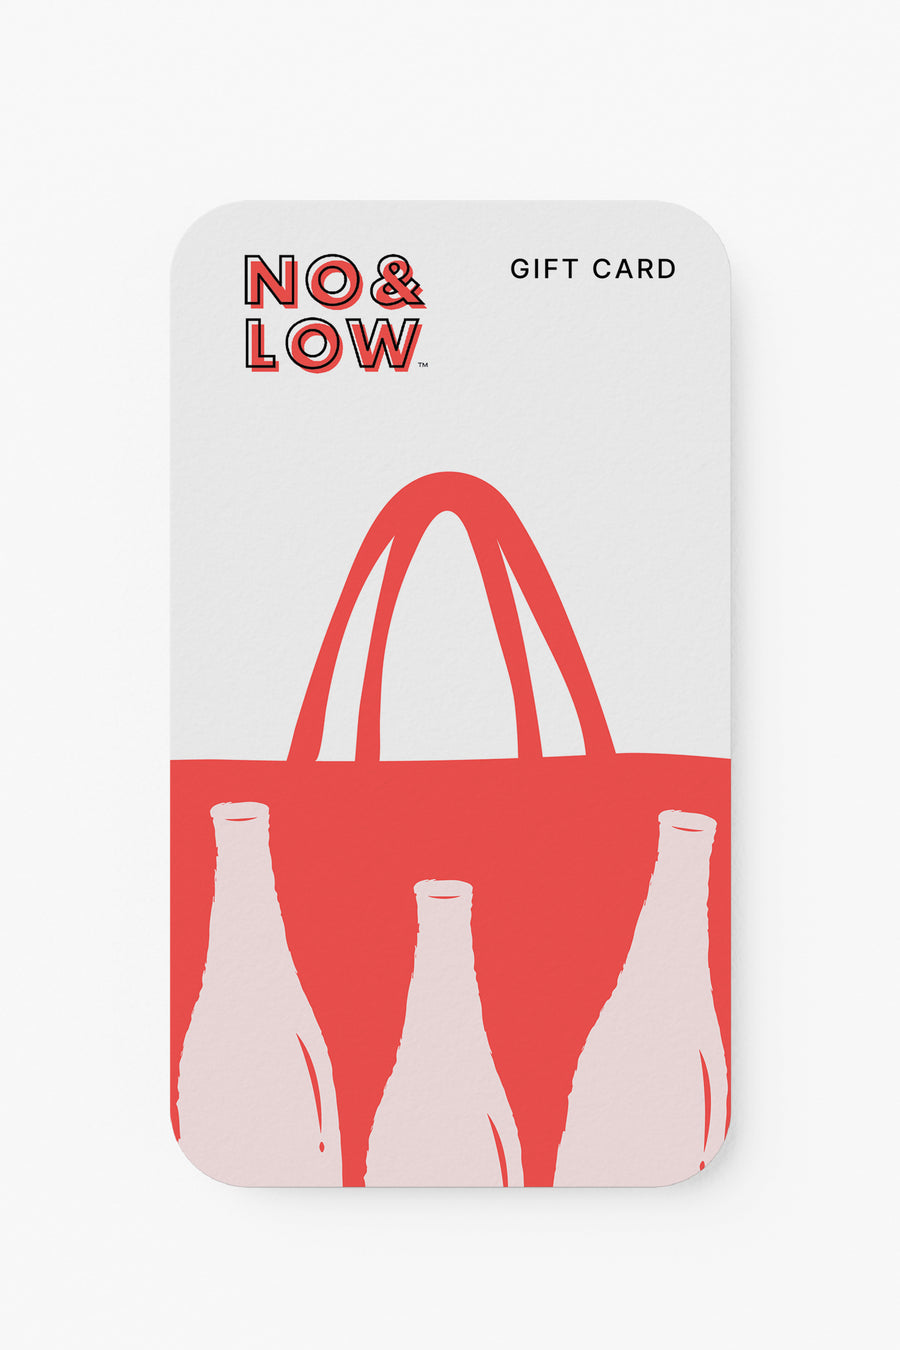 No & Low gift card non-alcoholic shop